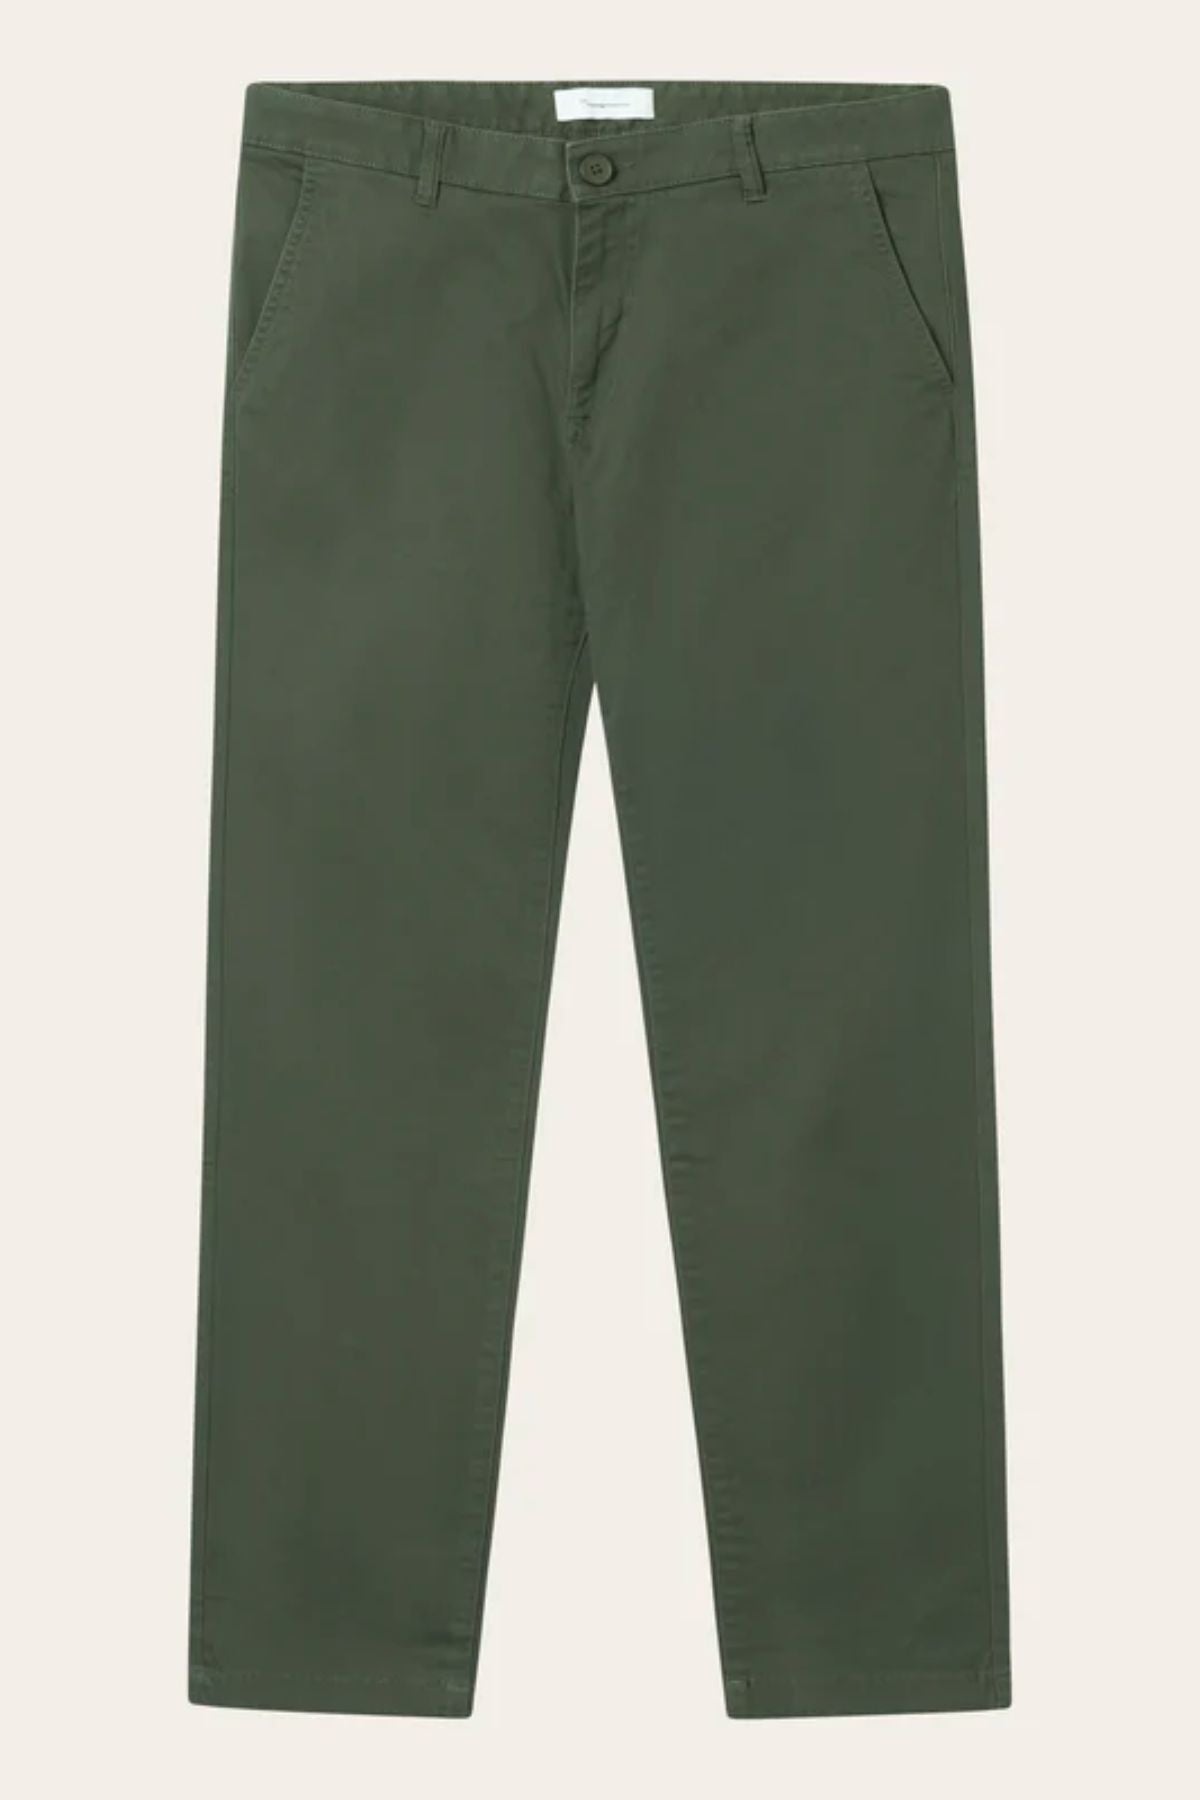 Chino luca slim twill chino pants - Knowledge cotton apparel